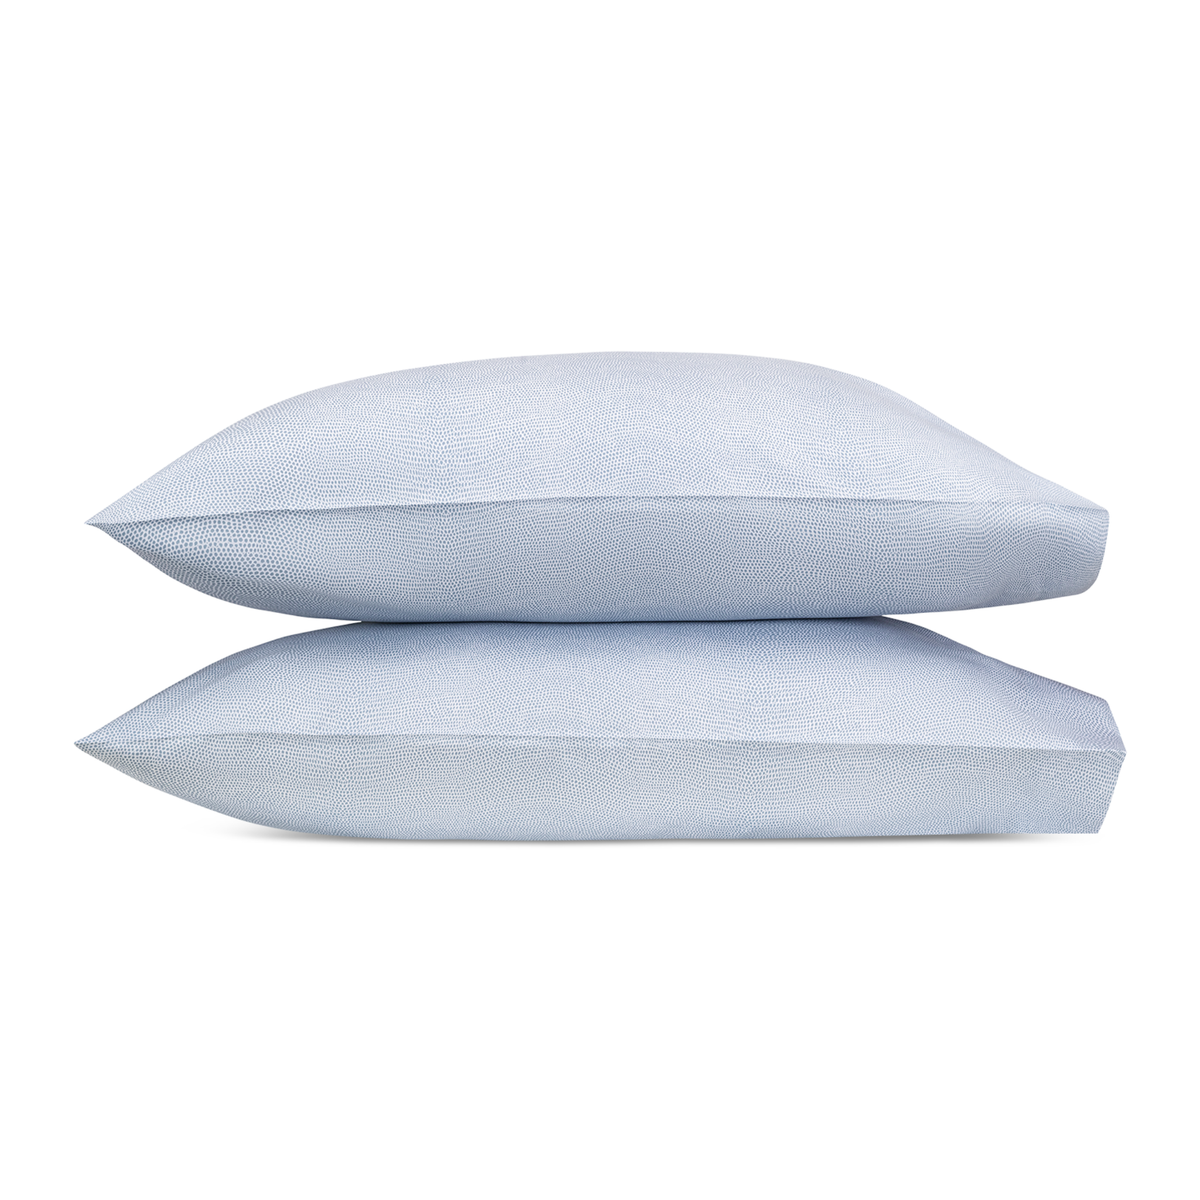 Pair of Pillowcases of Hazy Blue Matouk Jasper Bedding